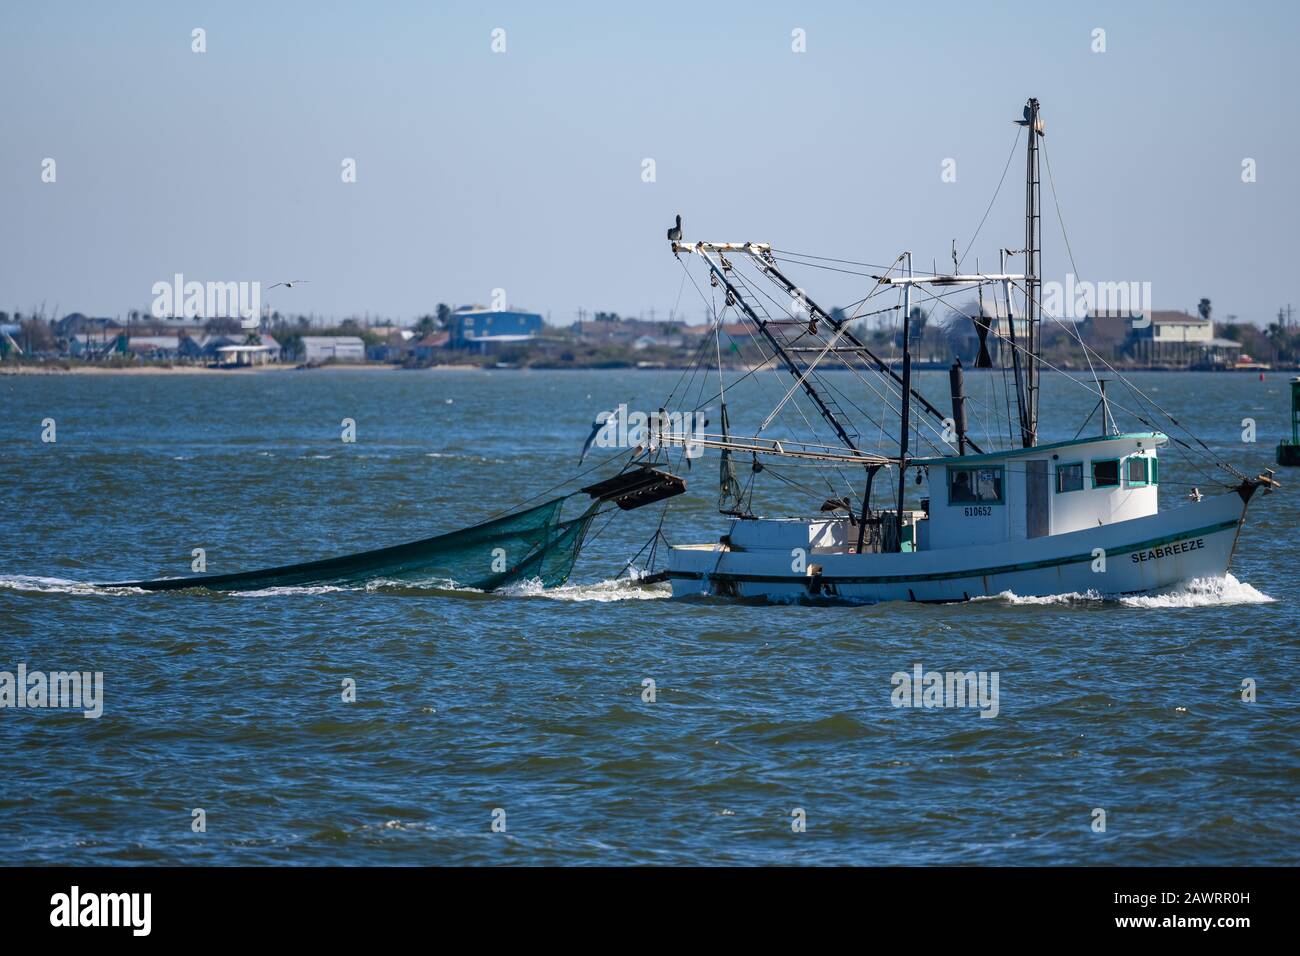 A shrimp boat operating in the Gulf of Mexico near Galveston, Texas, USA. Stock Photo